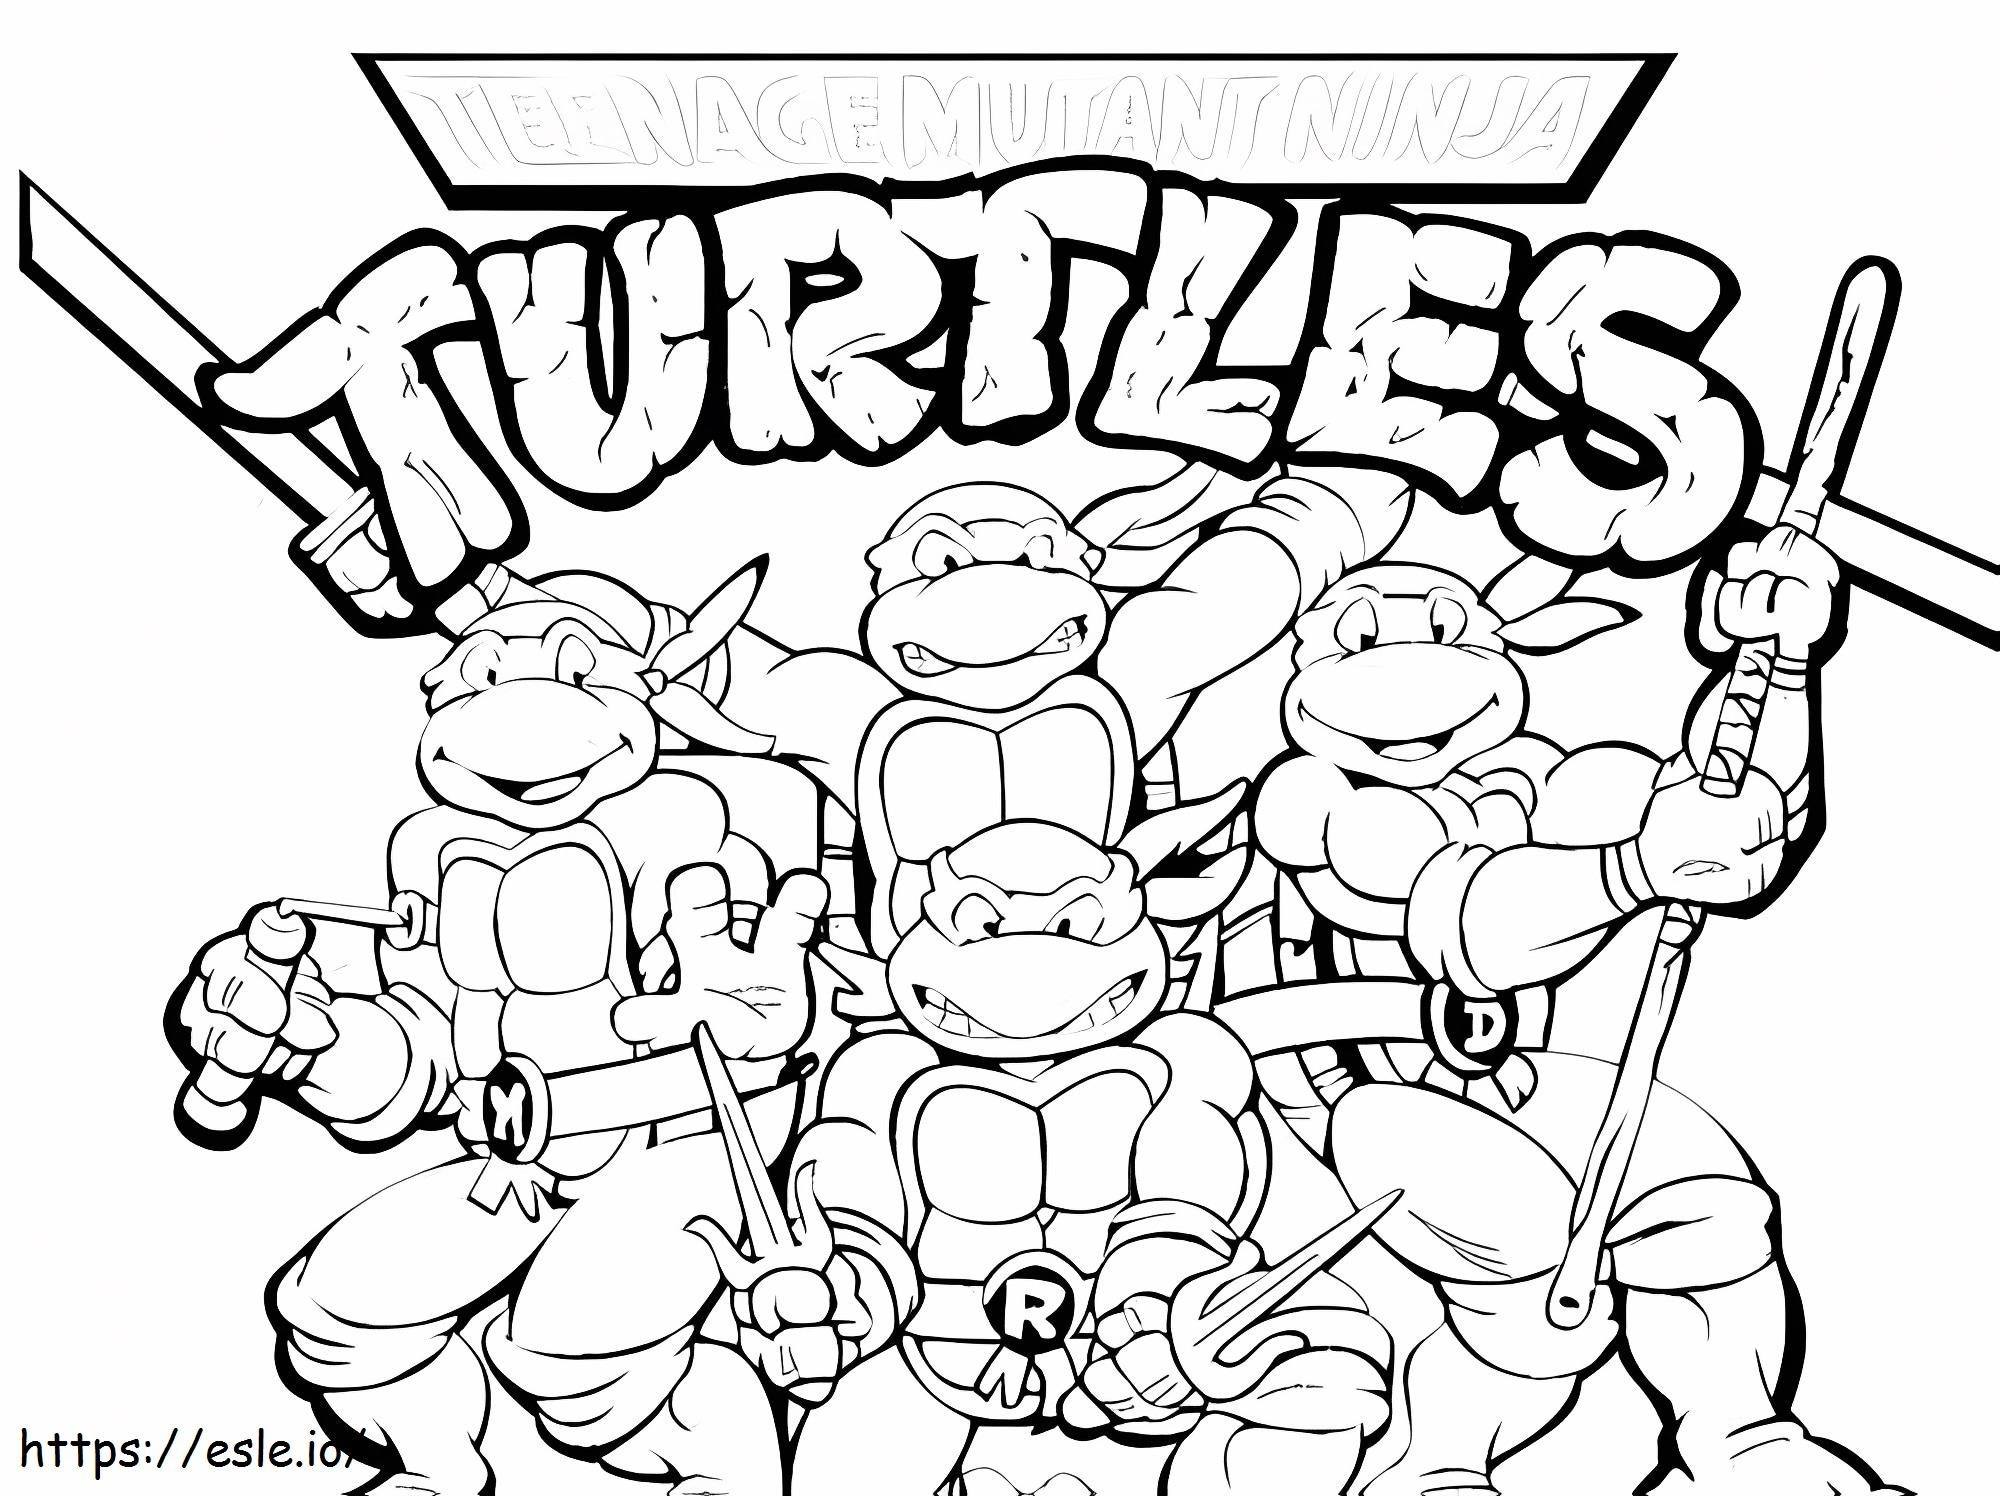 Happy Teenage Mutant Ninja Turtles coloring page